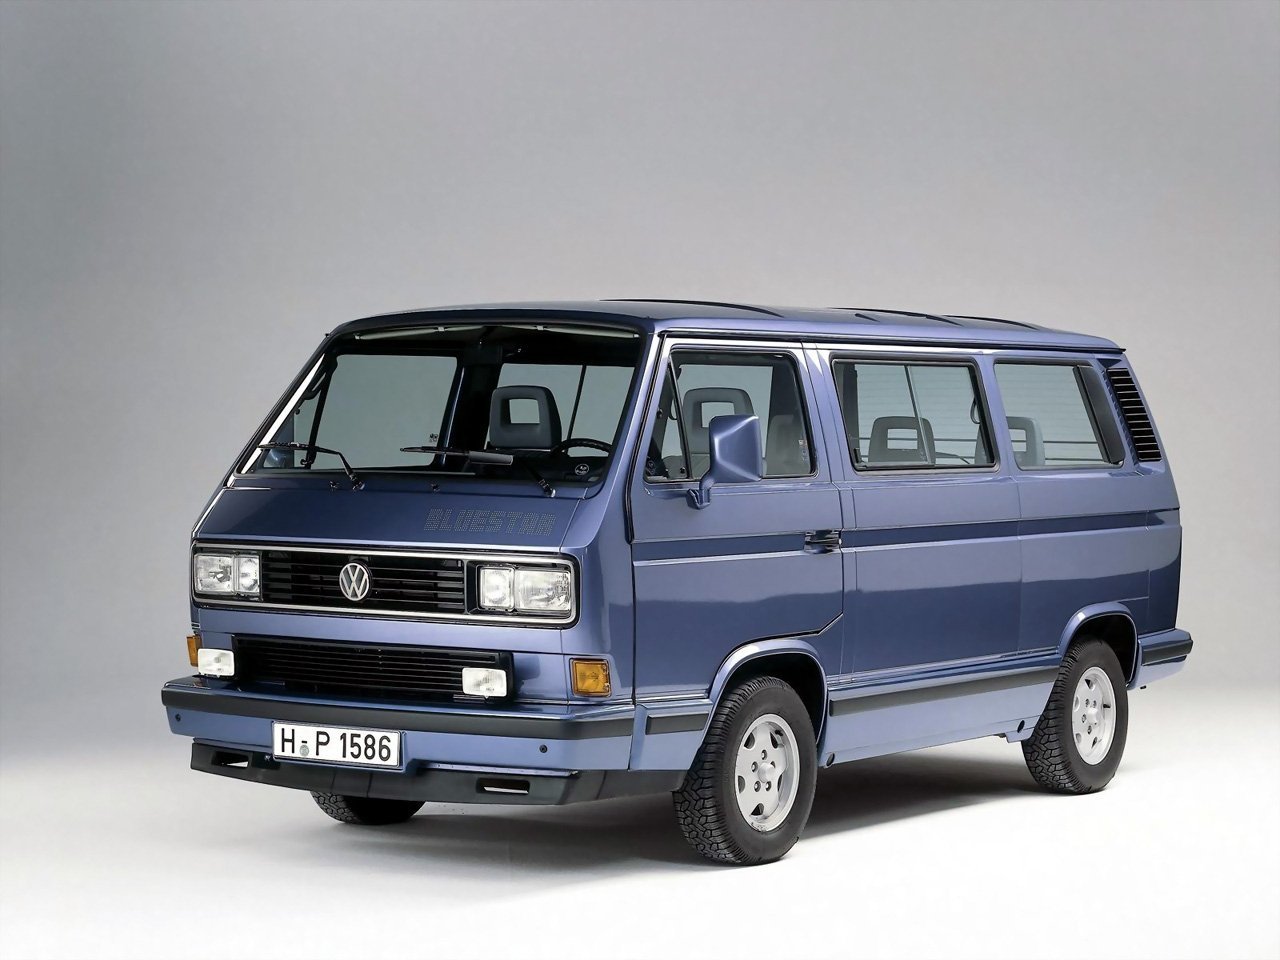 Снижаем расход Volkswagen Multivan на топливо, устанавливаем ГБО